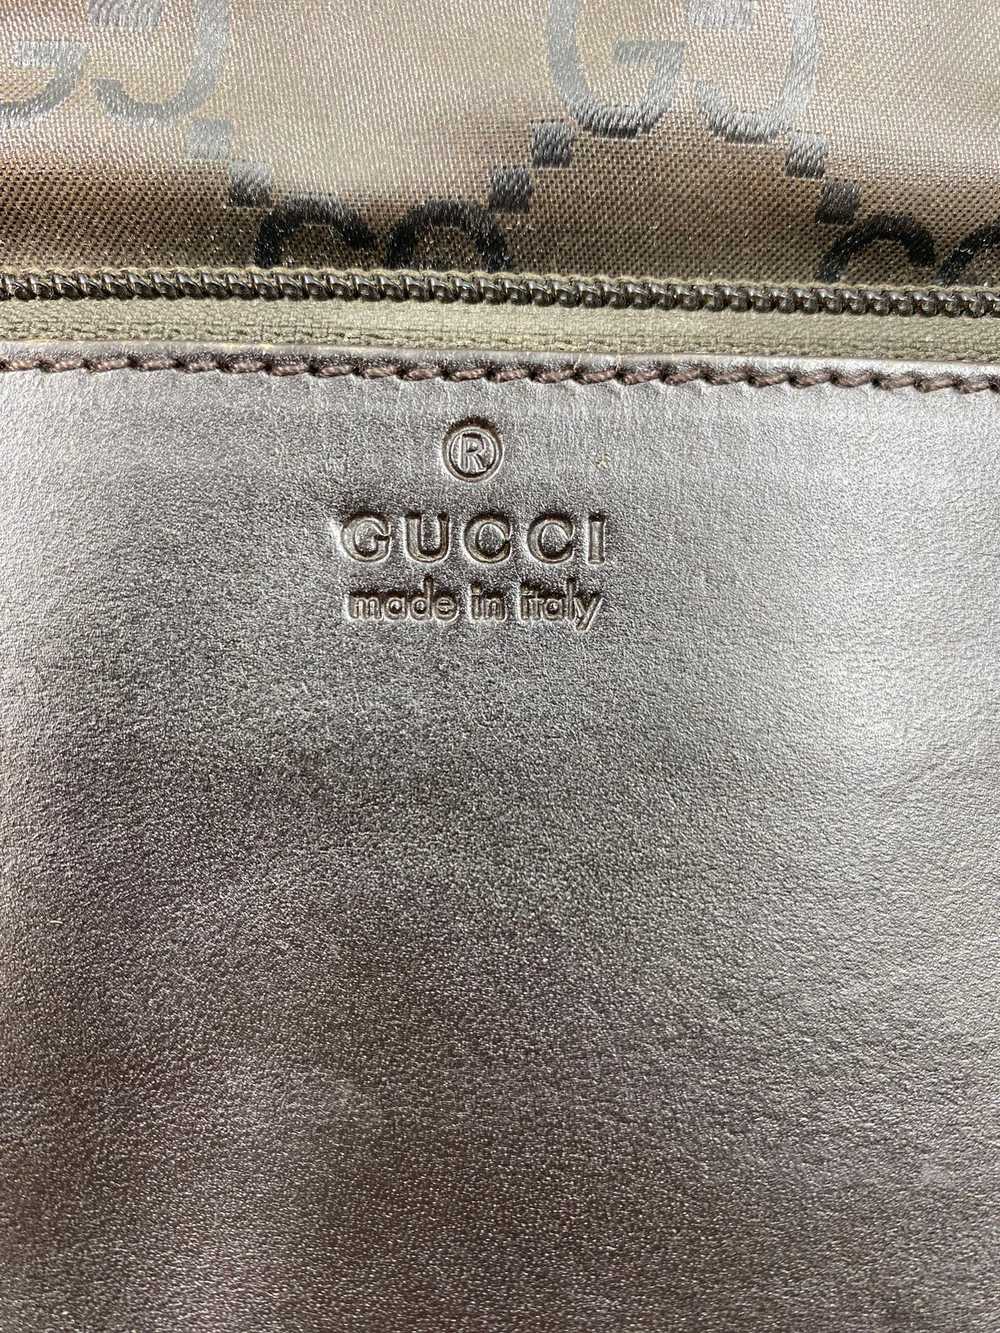 Authentic Gucci Brown Shoulder Bag - image 2